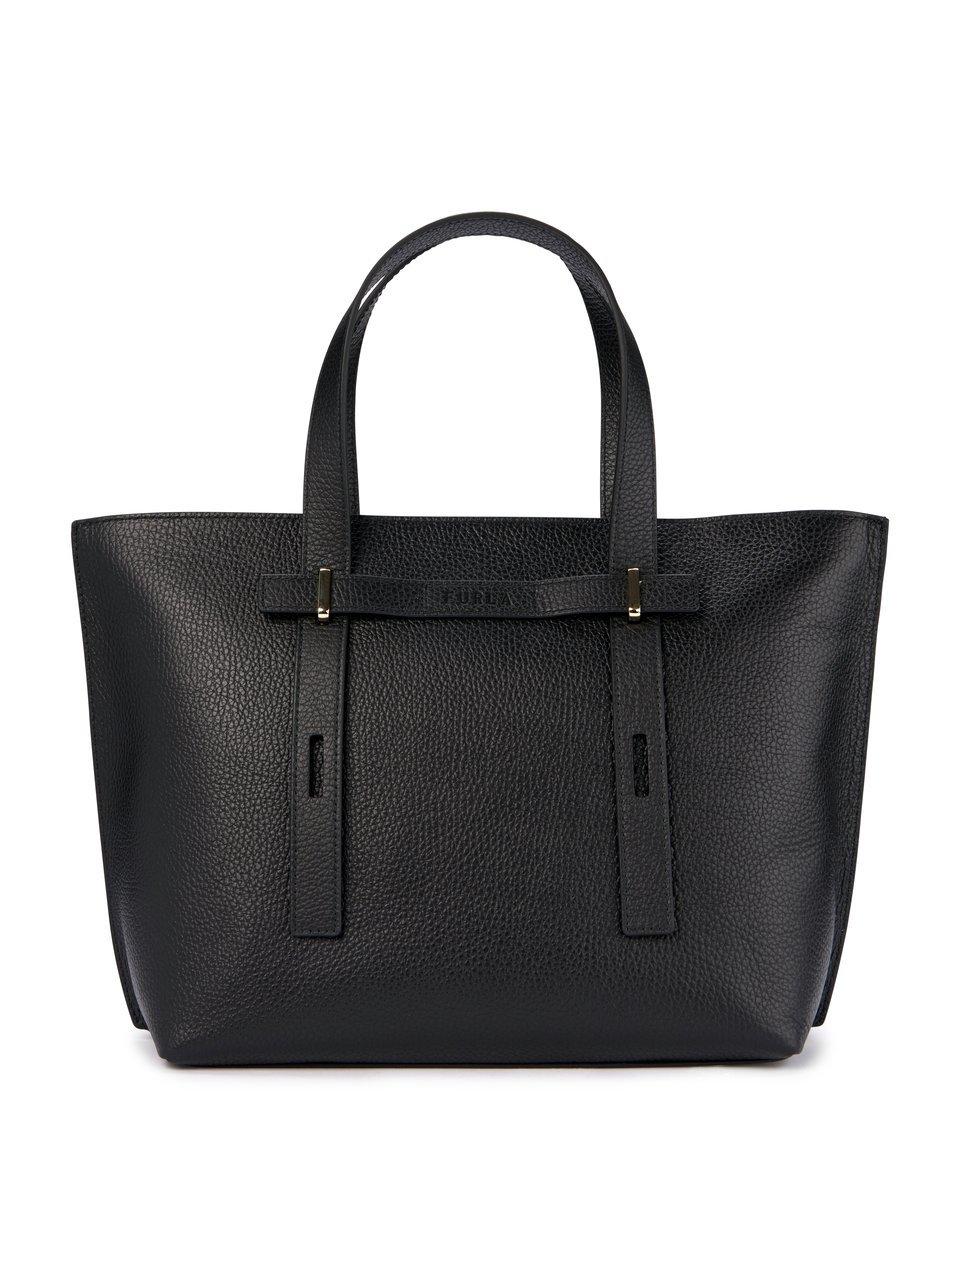 Image of Handbag Giove Furla black